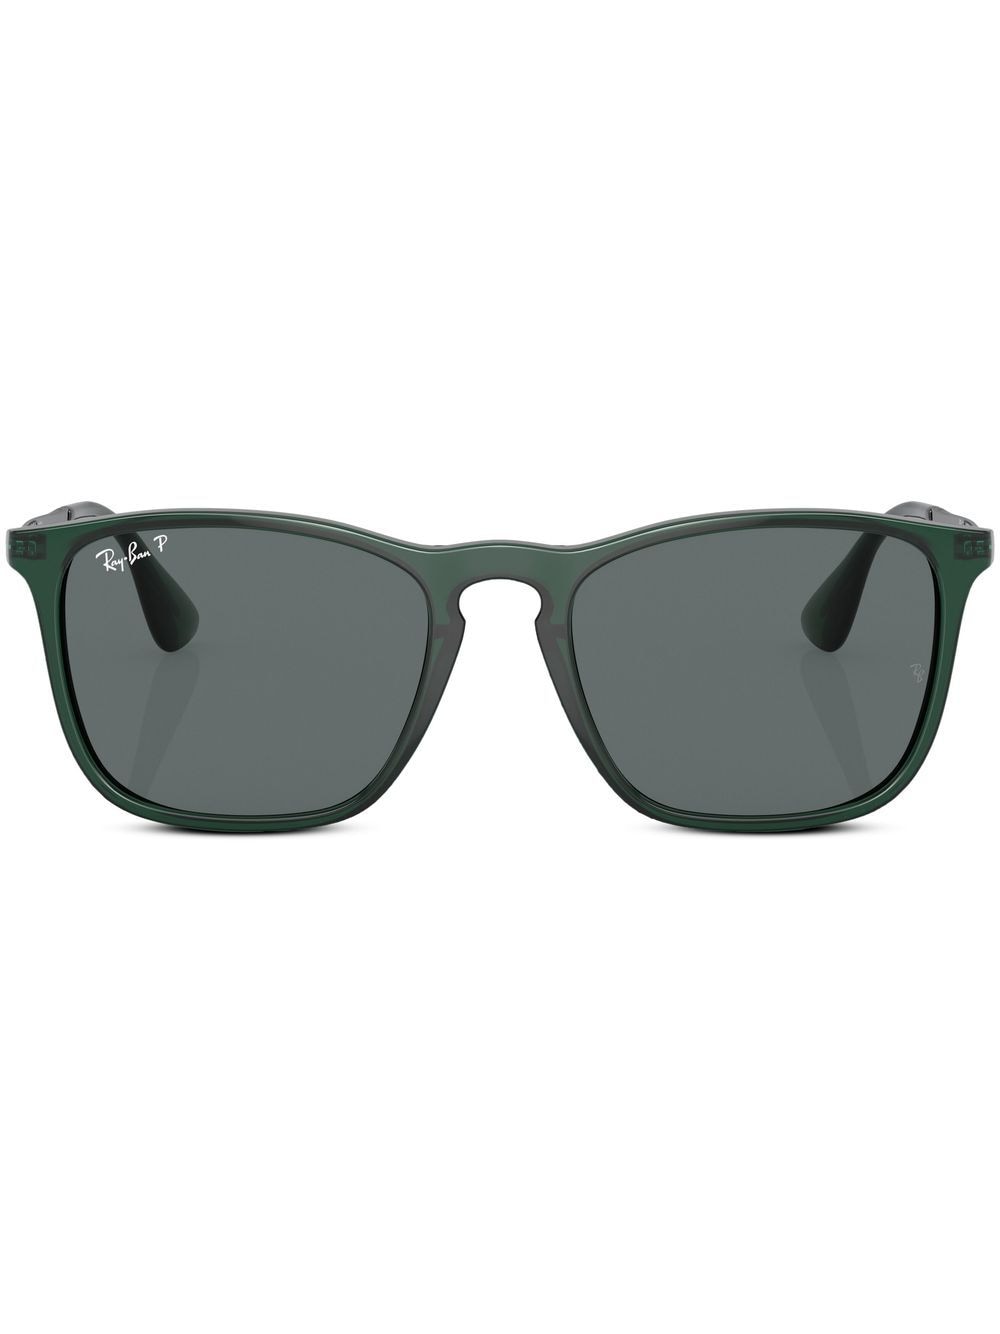 Ray-Ban Chris square-frame sunglasses - Green von Ray-Ban